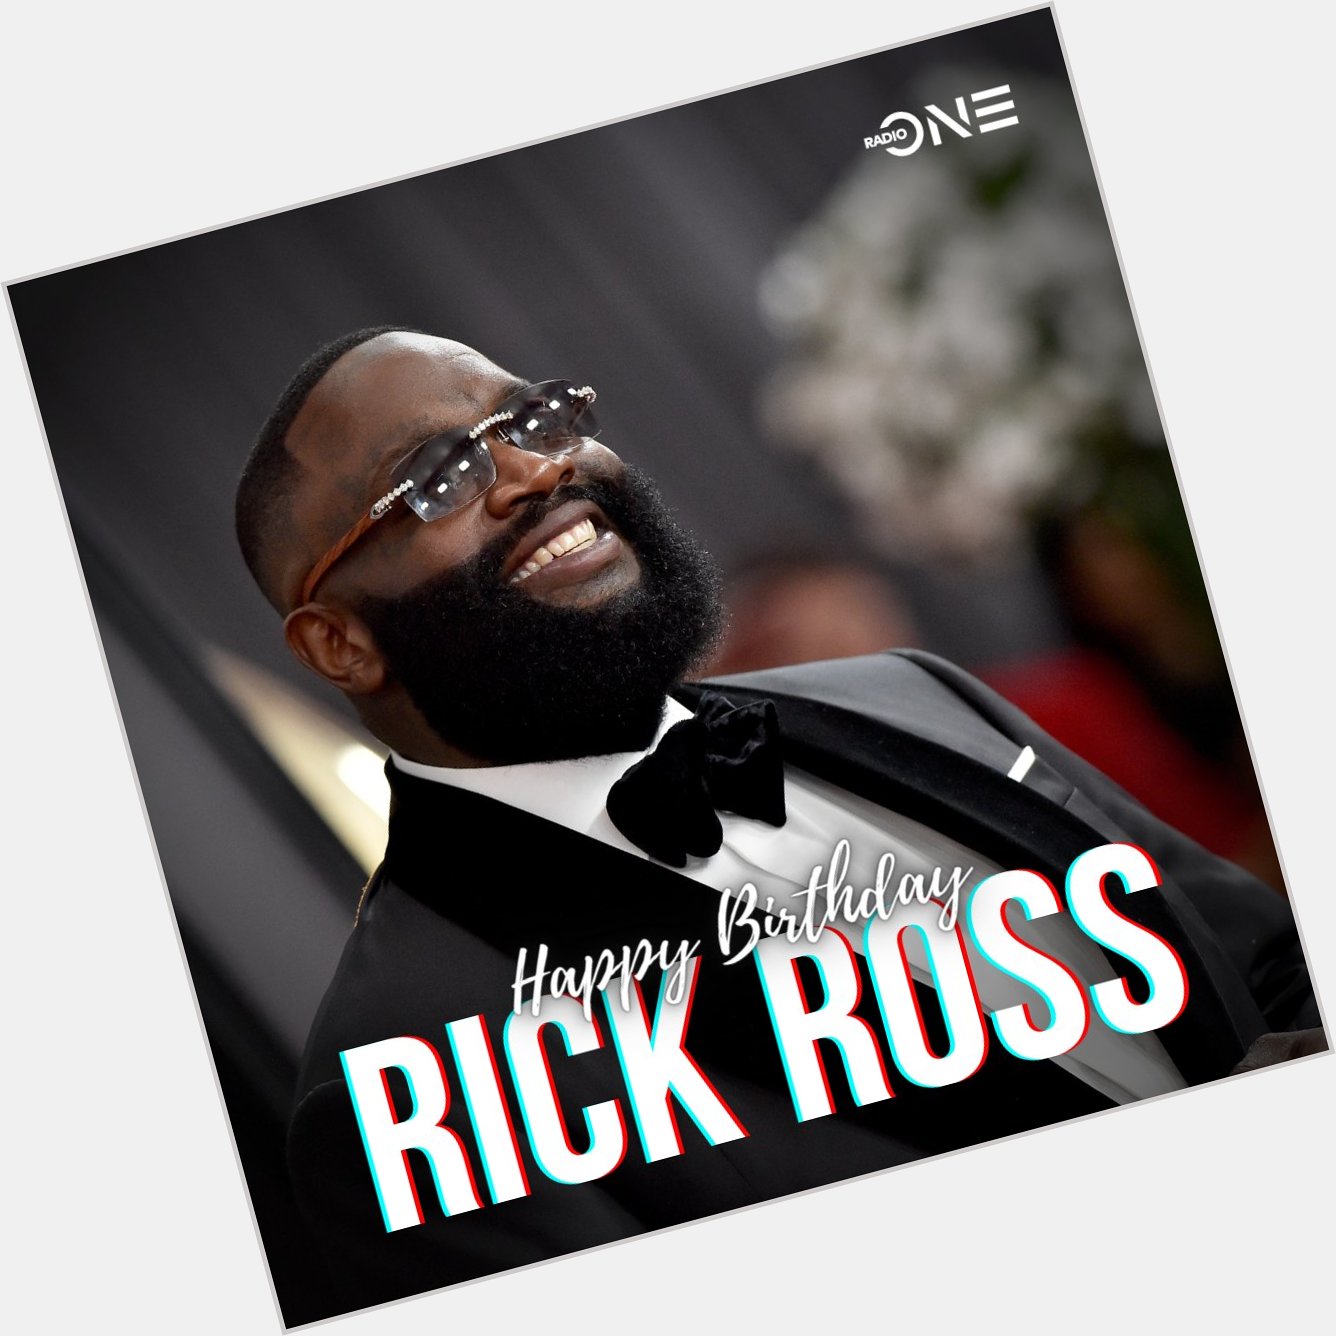 Wishing Rick Ross a happy 45th birthday 